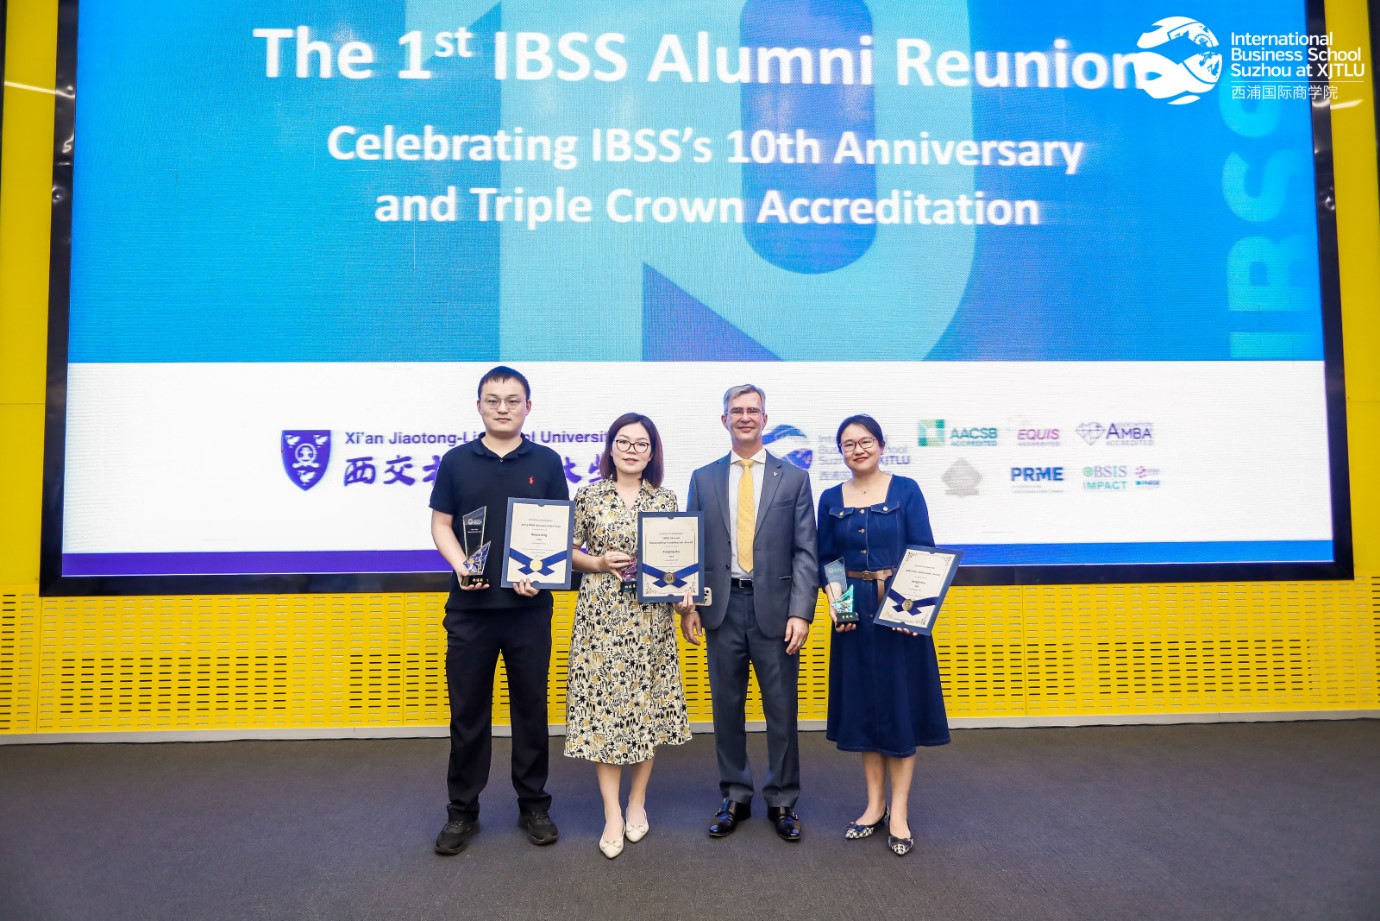 International Business School Suzhou at XJTLU celebrates 10 years with alumni event